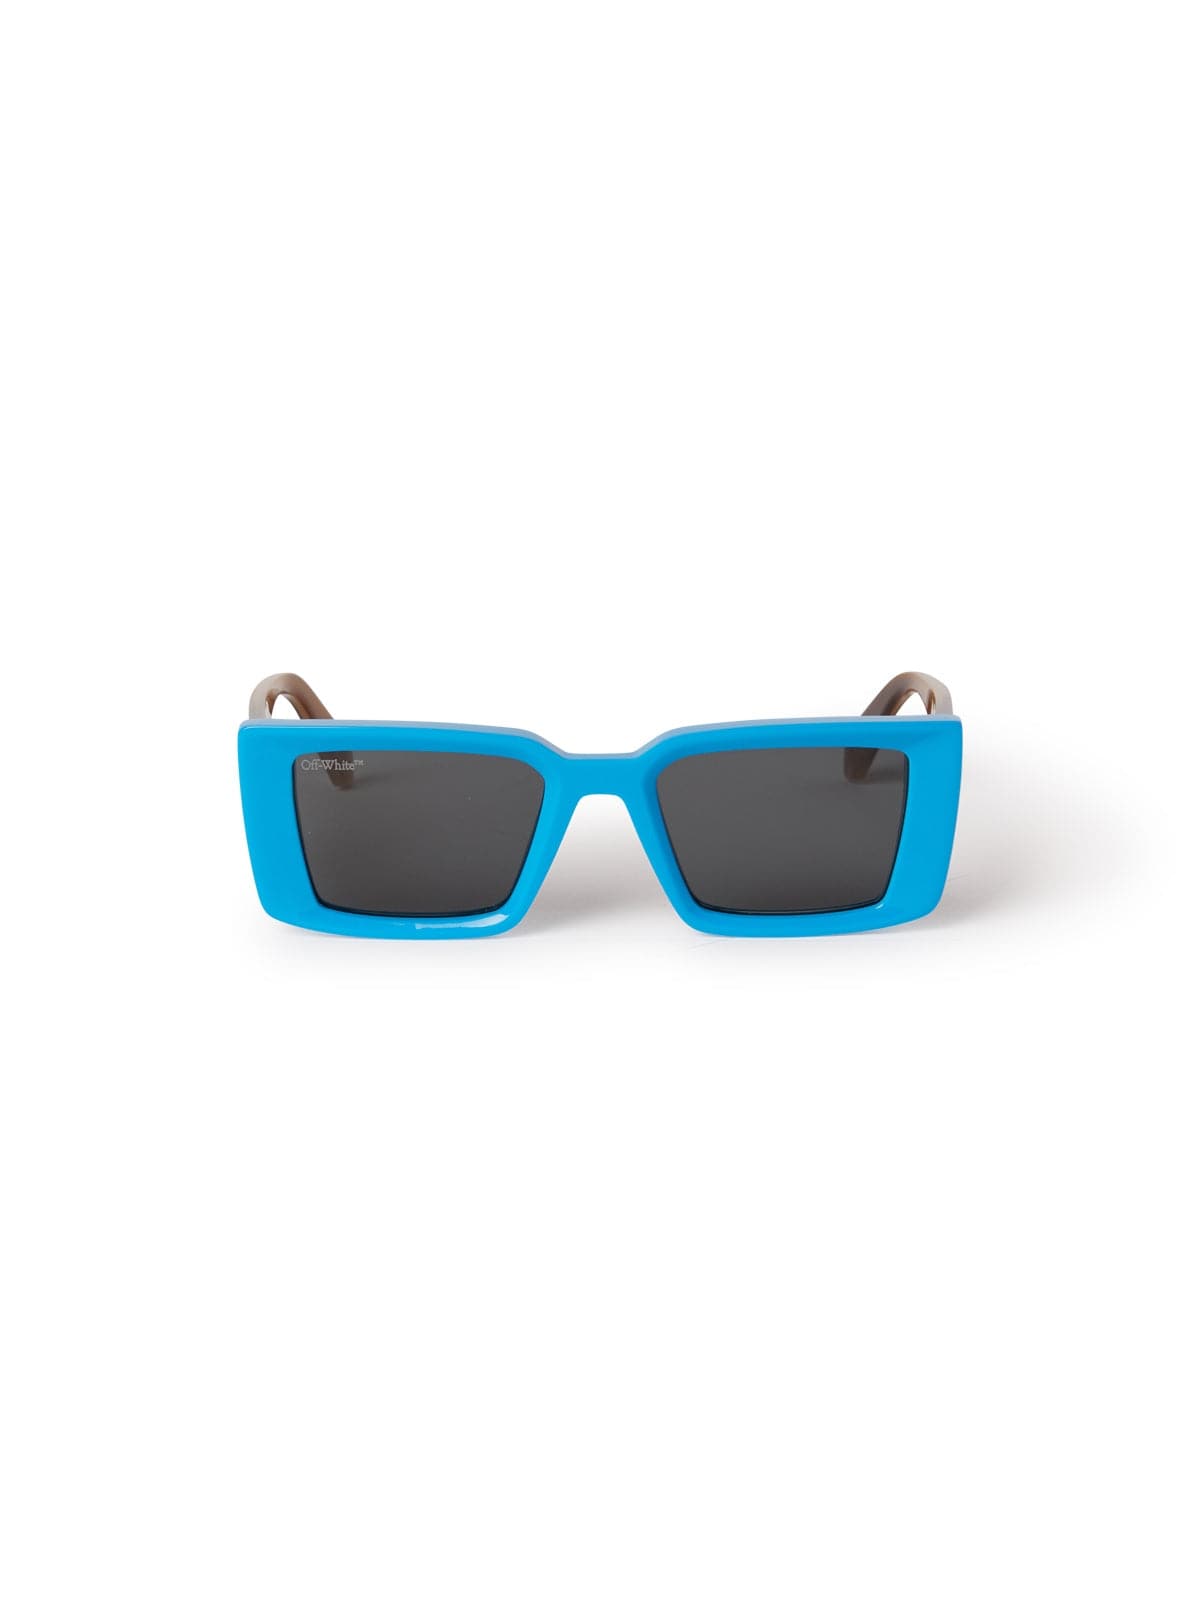 Off White SAVANNAH SUNGLASSES blue sunglasses